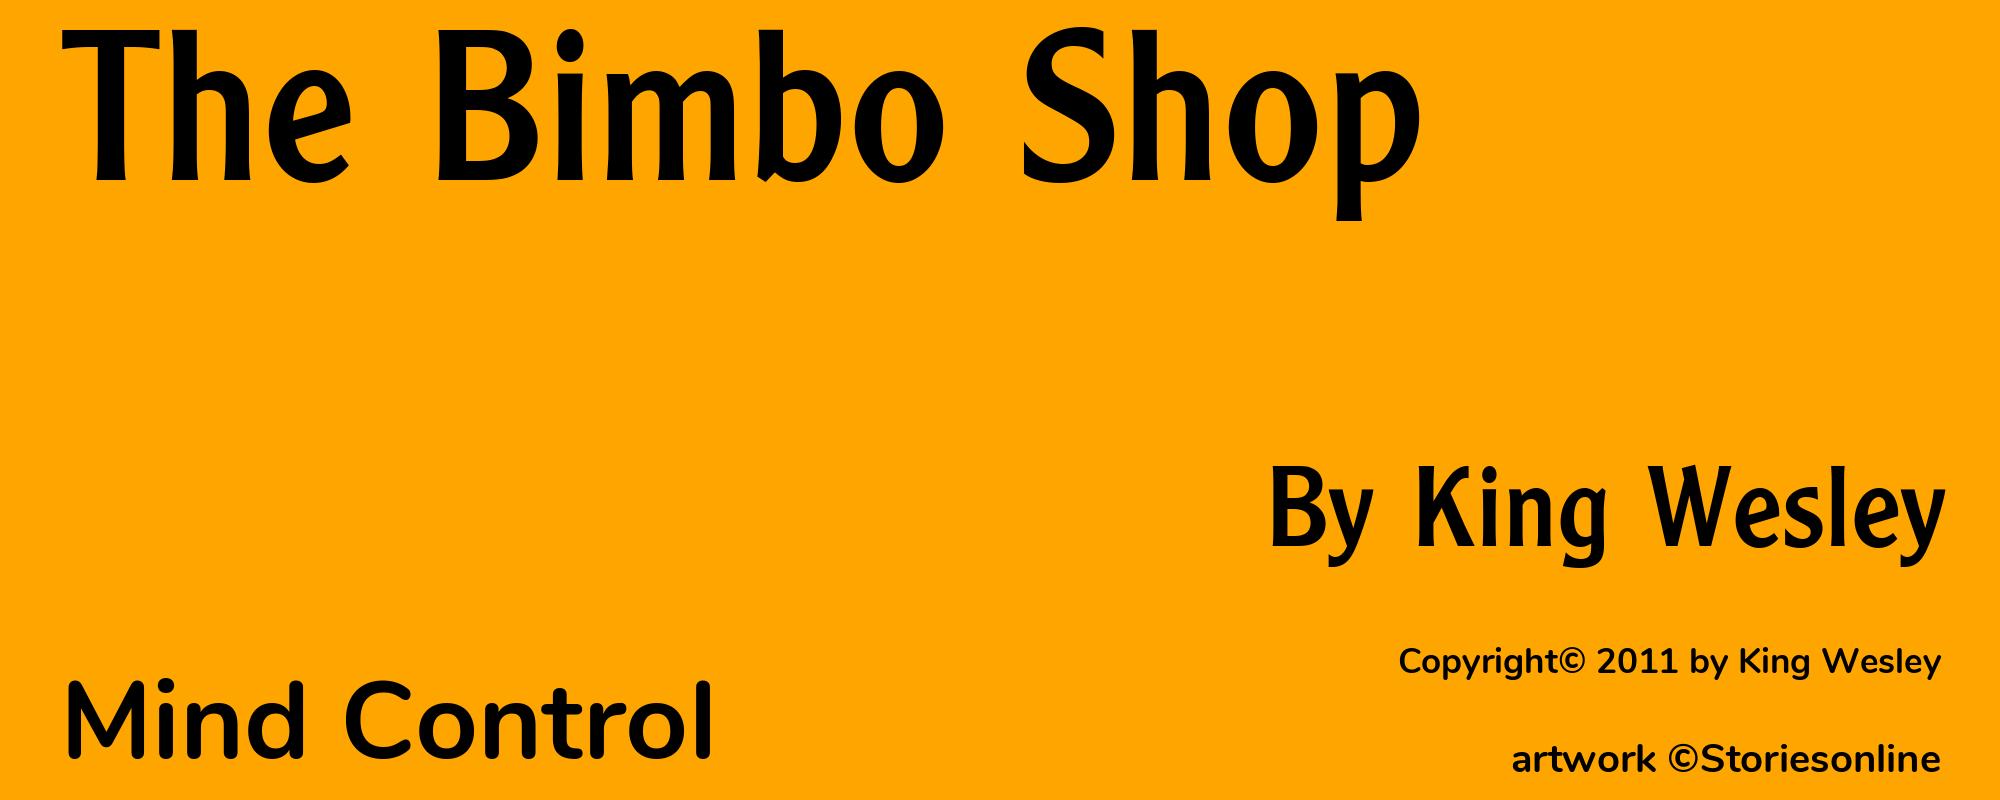 The Bimbo Shop - Cover